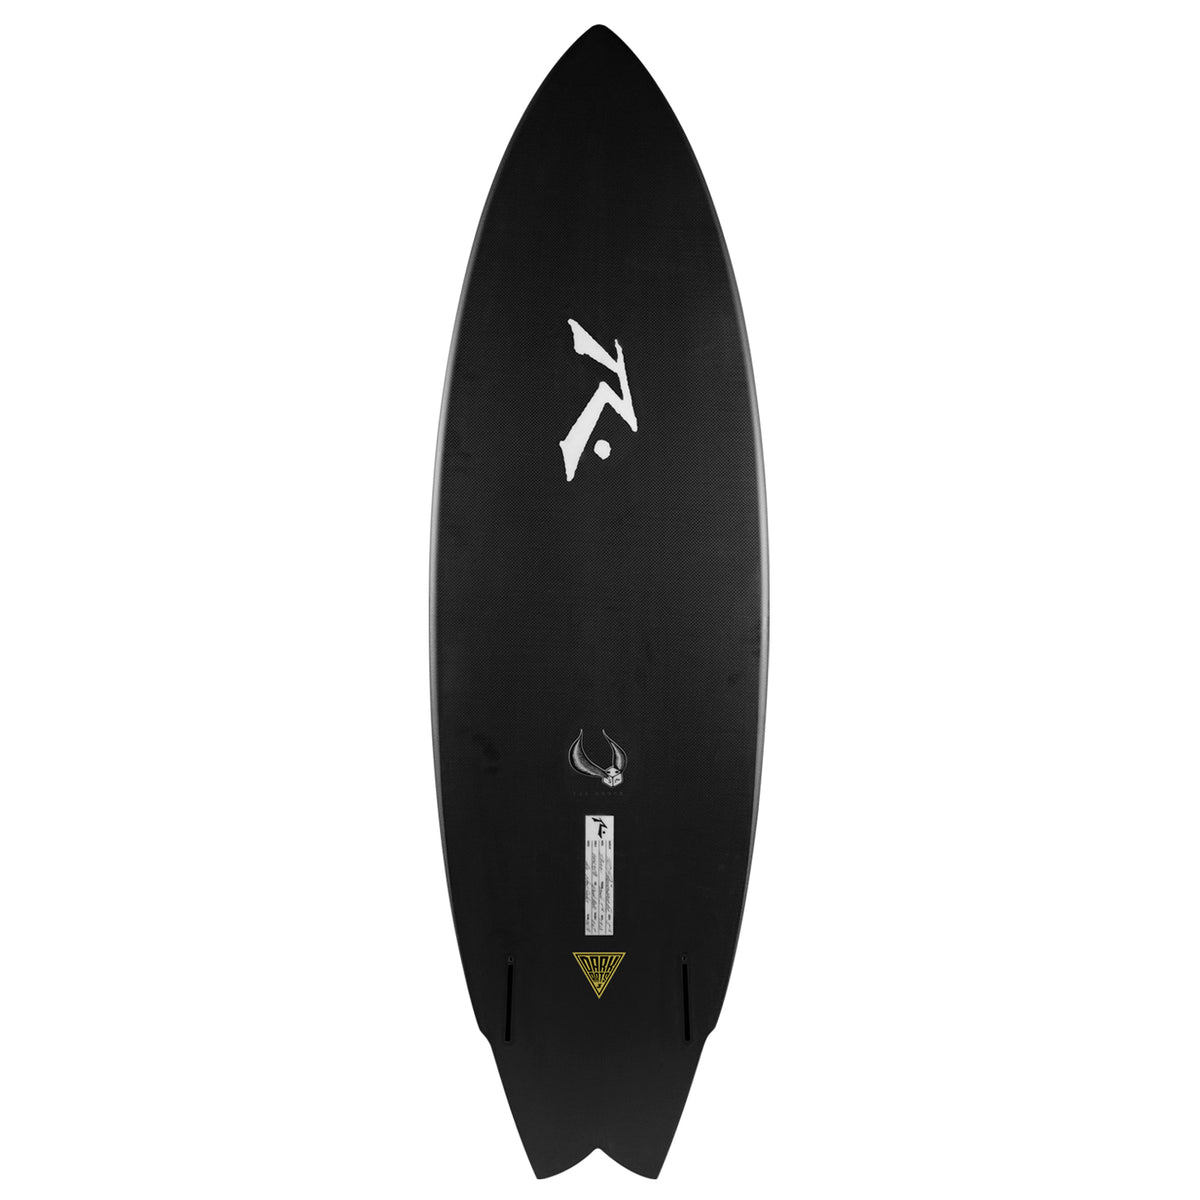 The Deuce Performance Twin Fin Surfboard - Rusty Surfboards + Noel Salas Collaboration - Bottom View - Dark Arts Carbon Construction